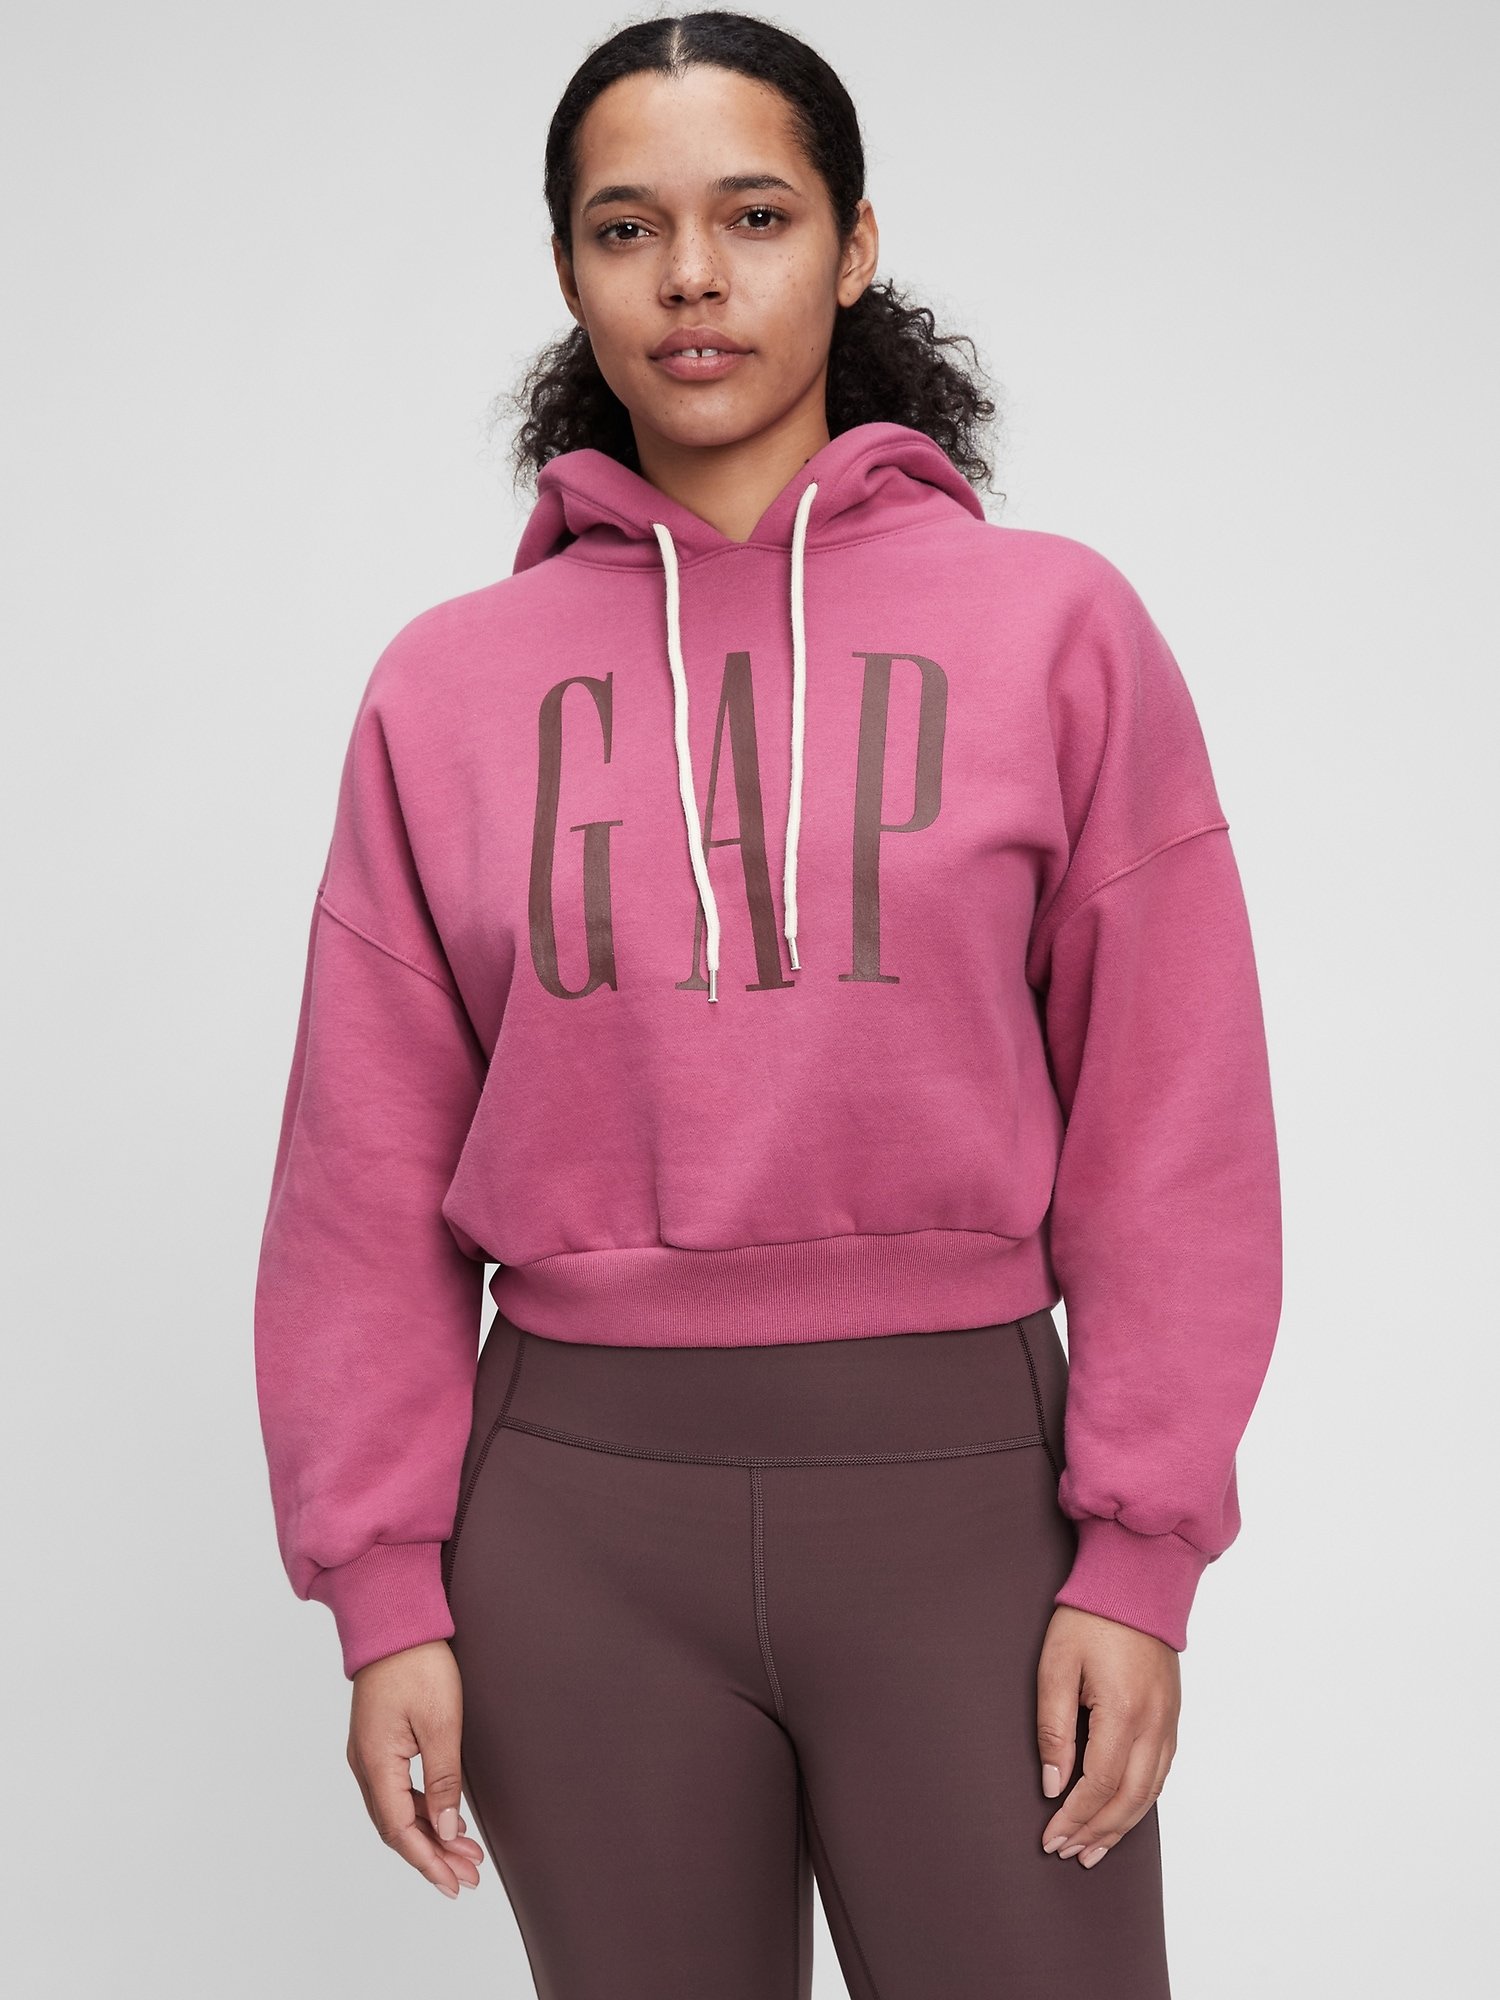 Gap Logo Crop Sweatshirt product image